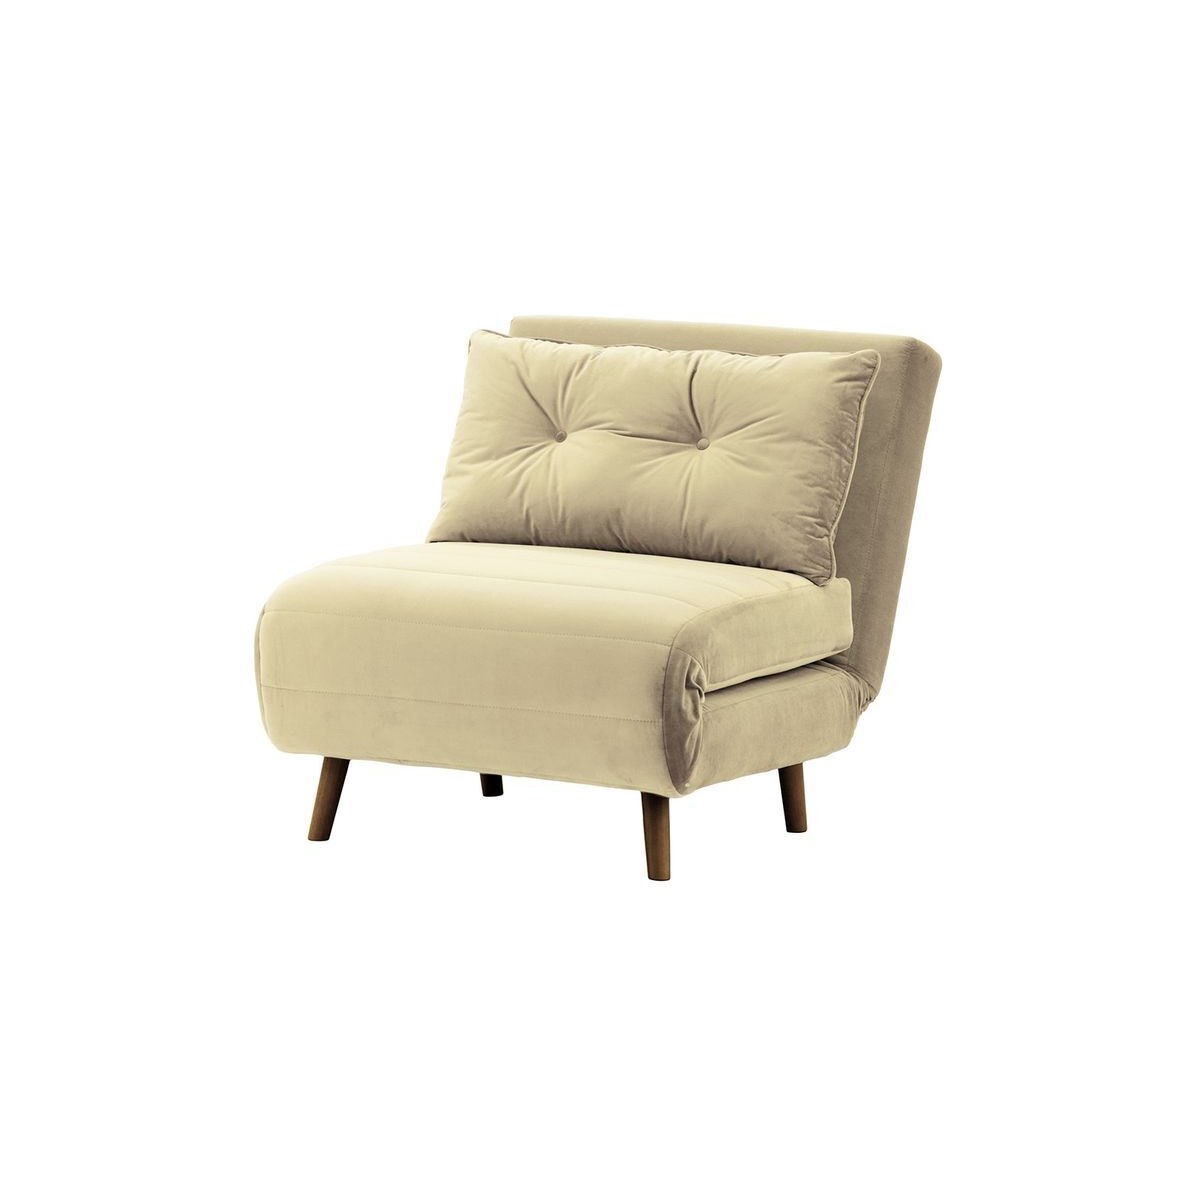 Flic Single Sofa Bed Chair - width 77 cm, mink, Leg colour: dark oak - image 1